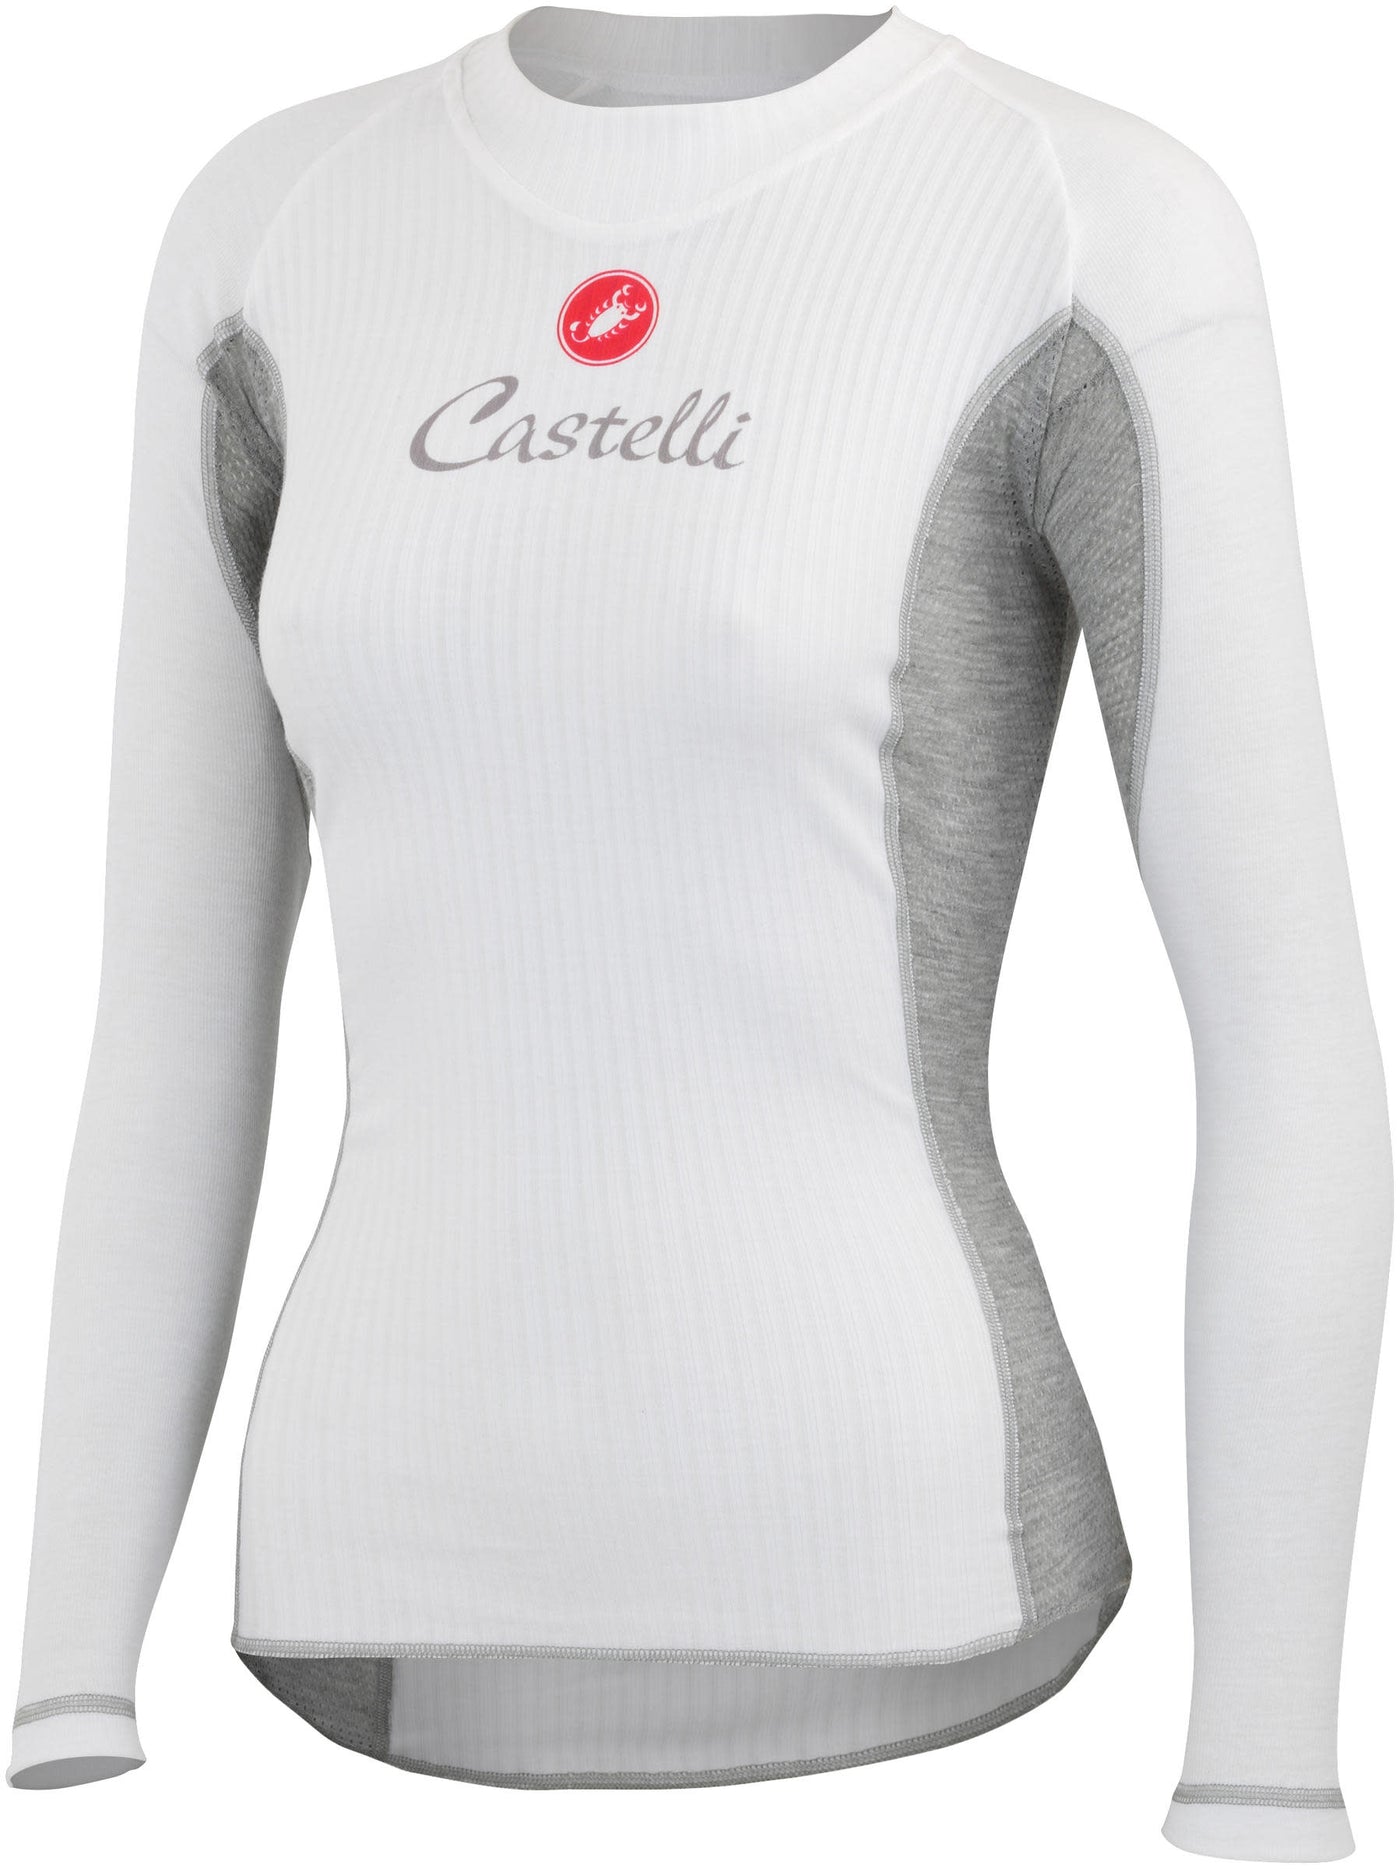 Castelli Flandria Long Sleeve (Women's)